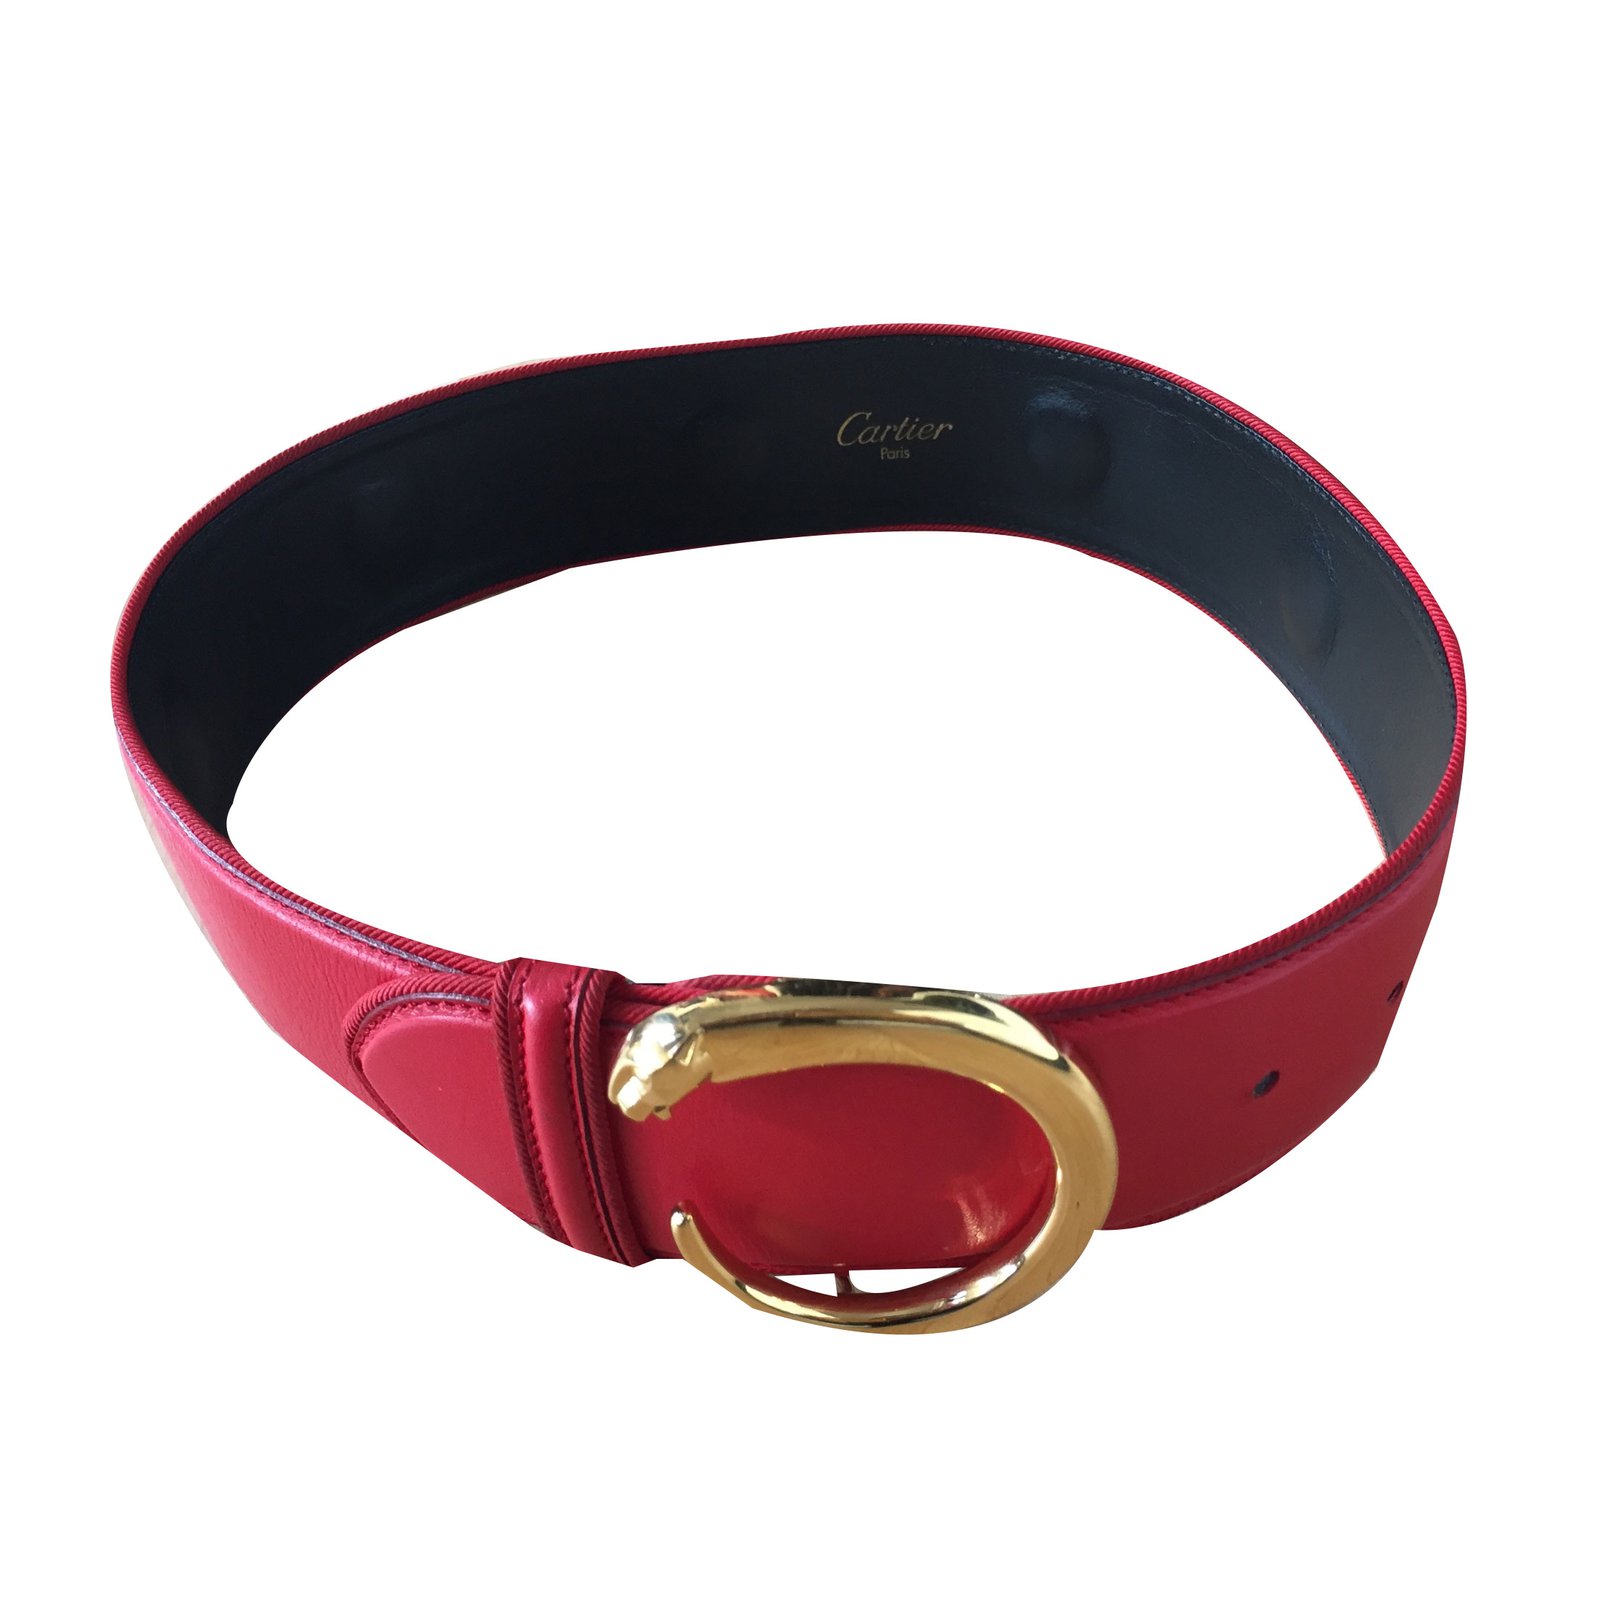 Cartier Belt Belts Leather Red ref 